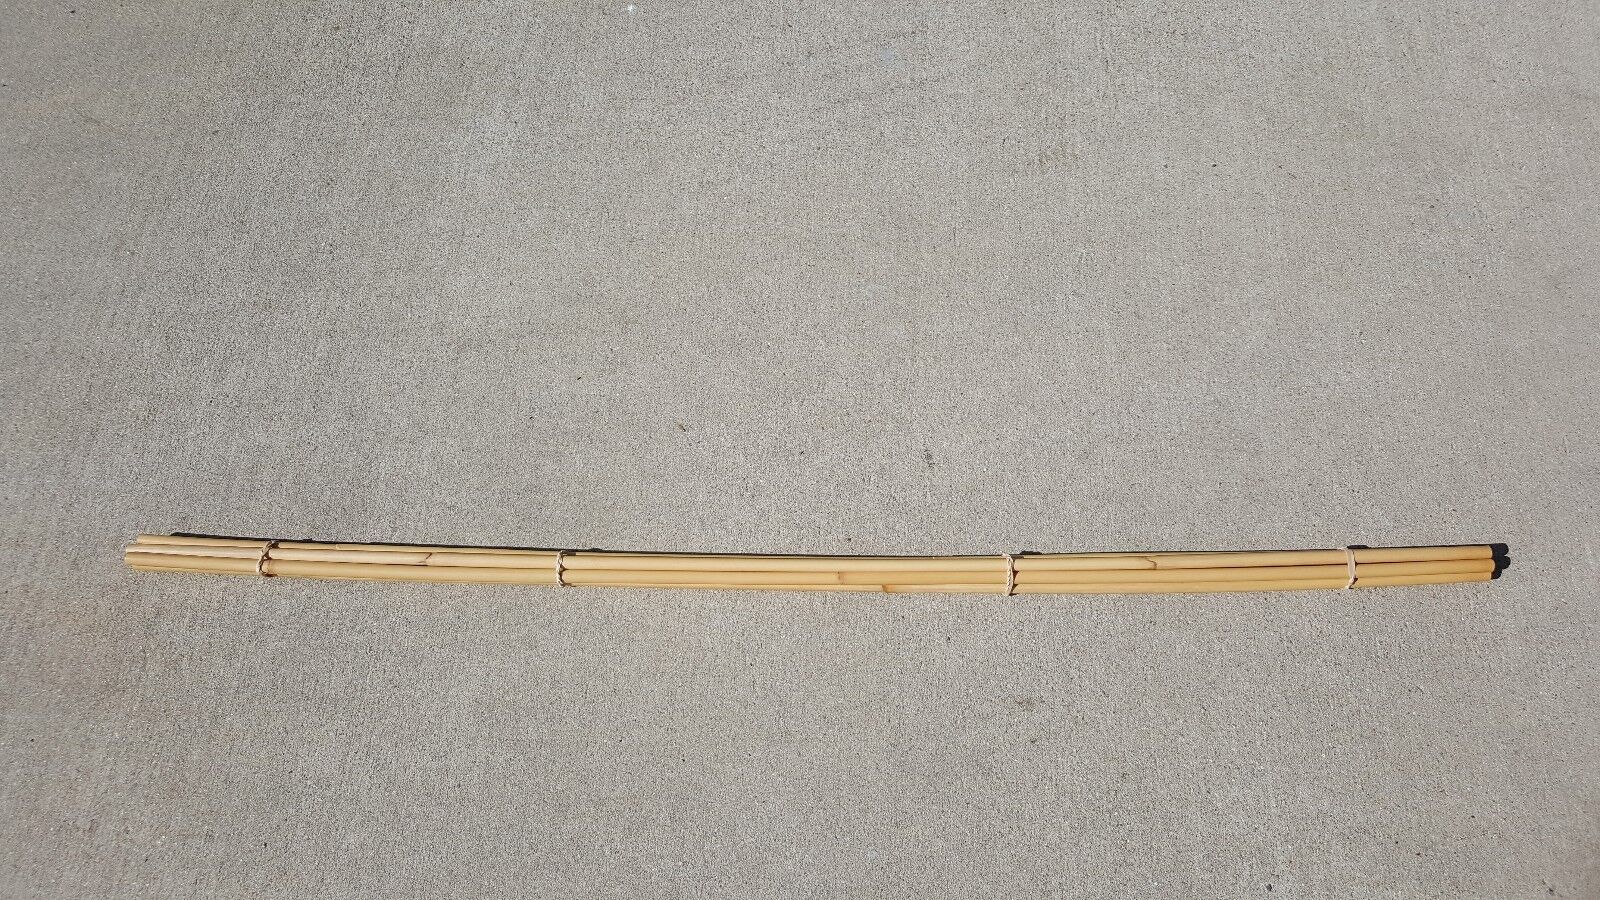 Rattan cane (46-48 inches), rattan core, rattan stick, rattan raw material 5pcs